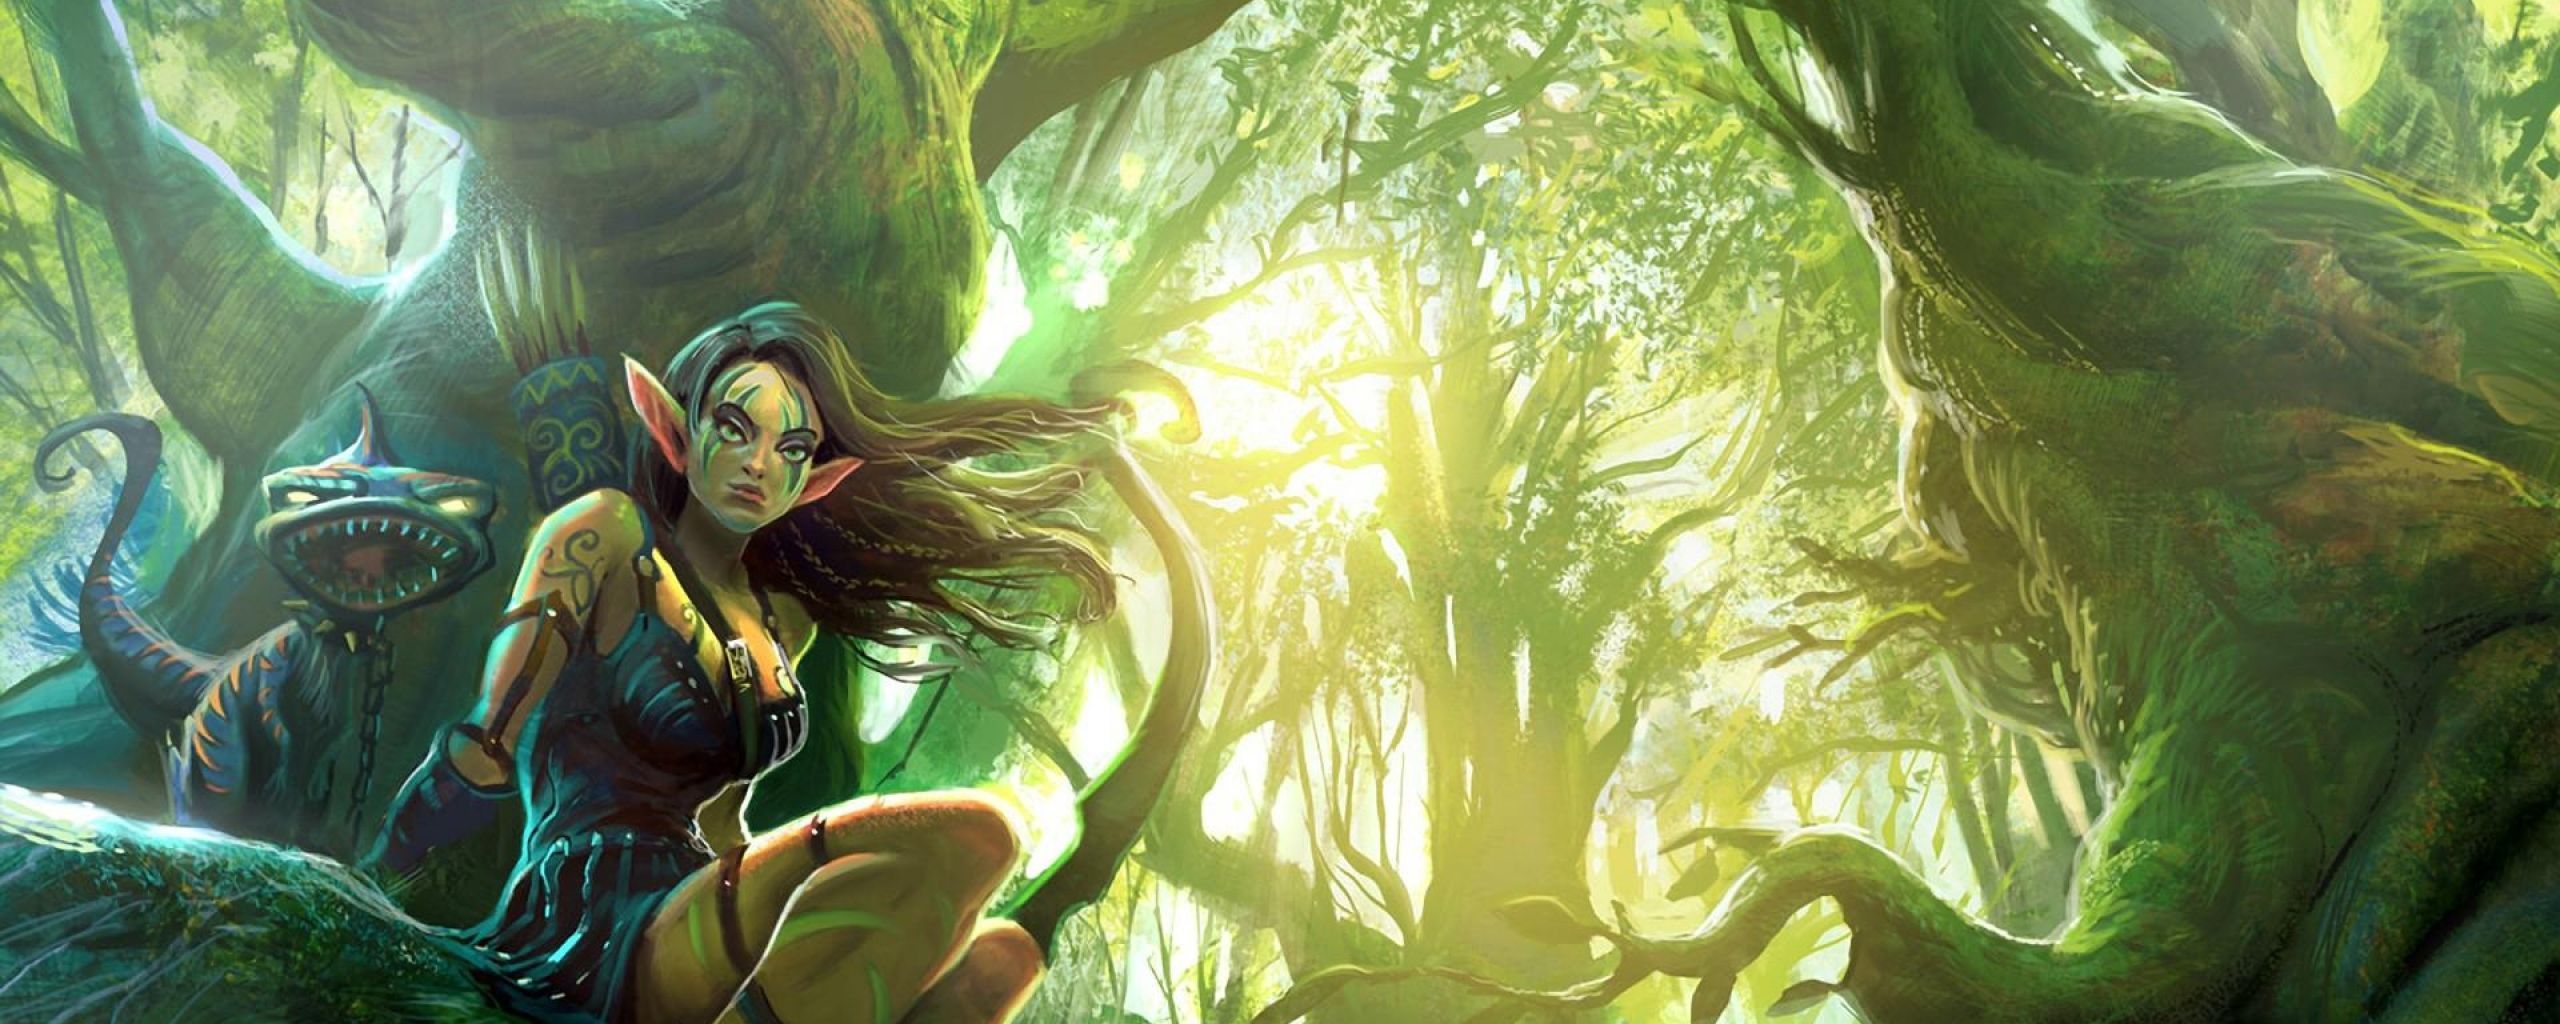 Wallpaper girl, elf, arrows, trees, forest. Fantasy